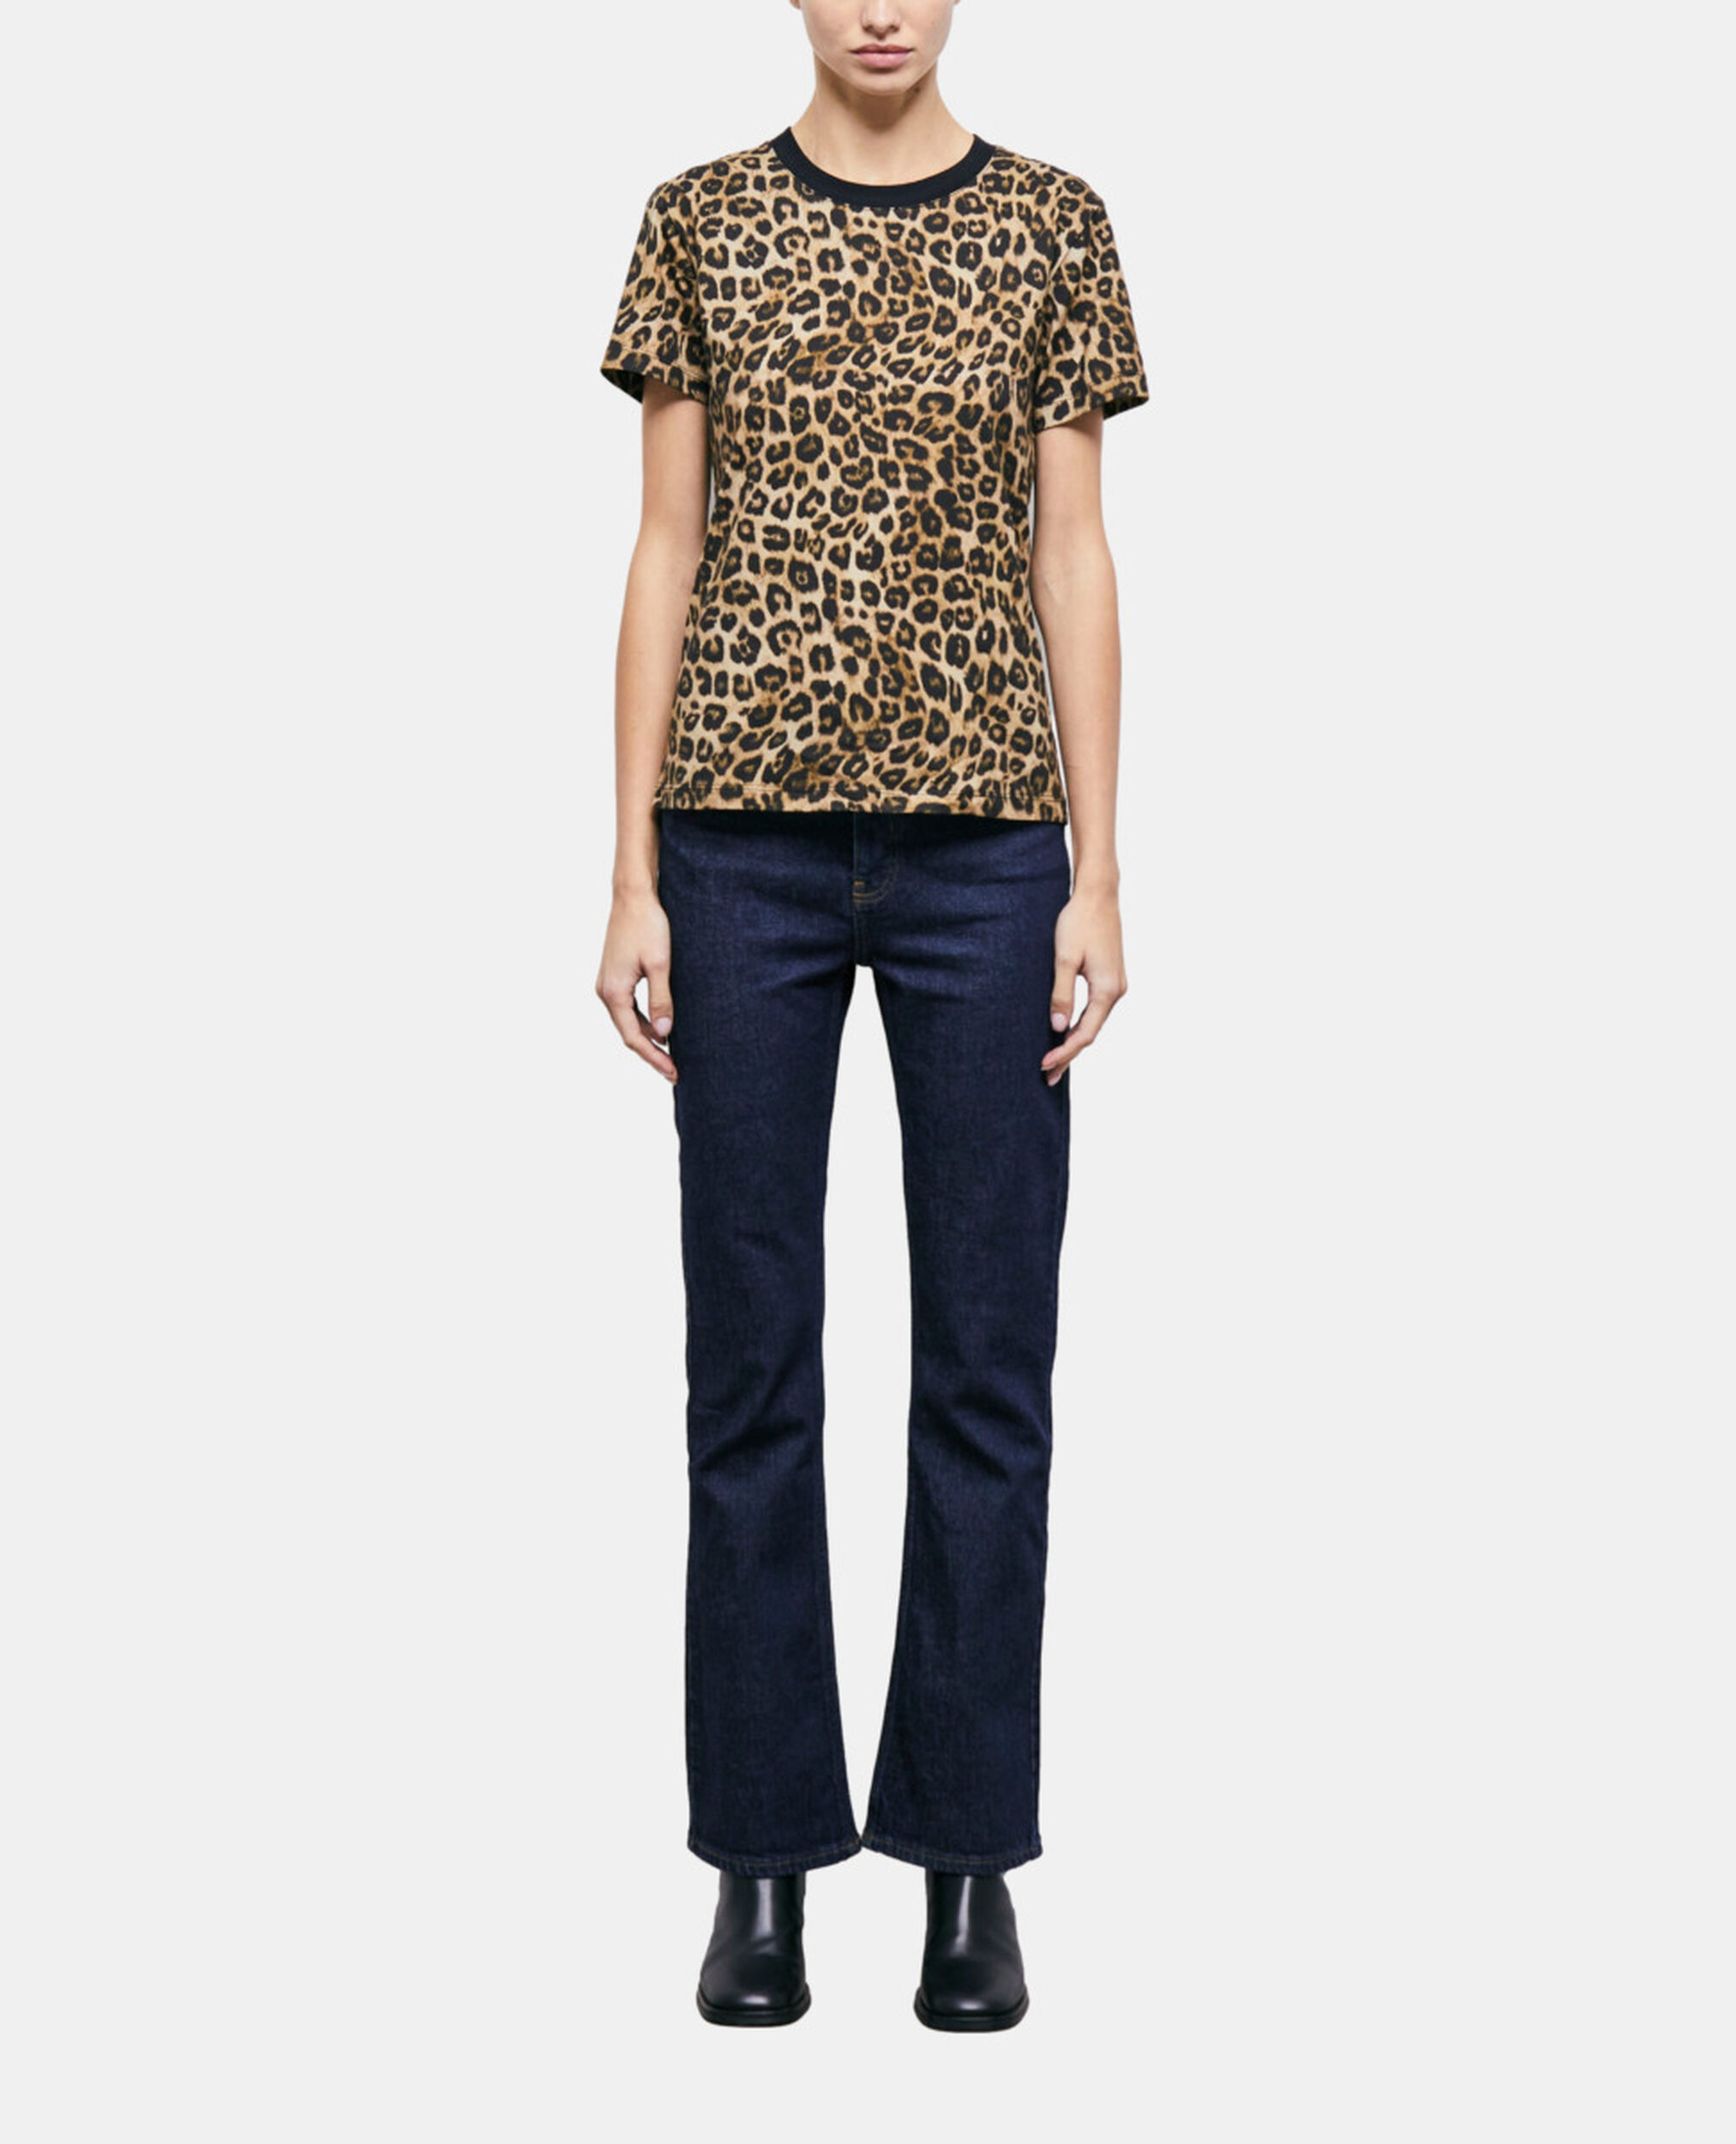 Camiseta leopardo para mujer, LEOPARD, hi-res image number null